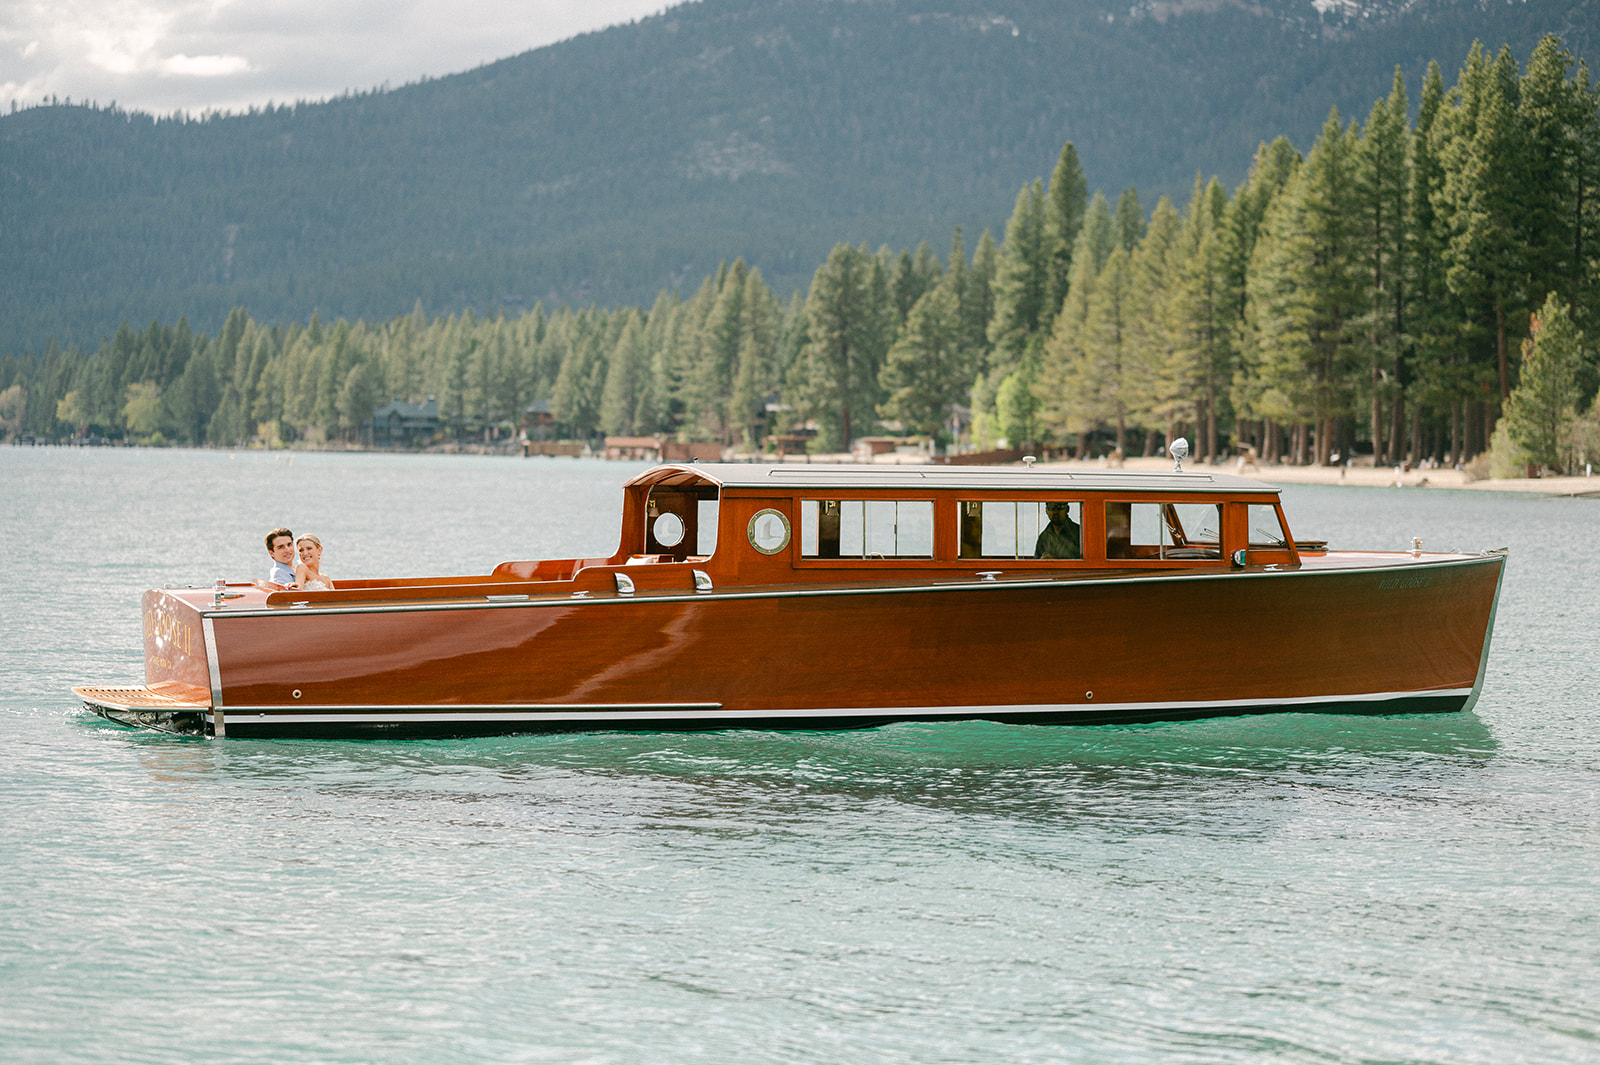 Couple enjoys wooden boat ride on the Wild Goose II on Lake Tahoe.